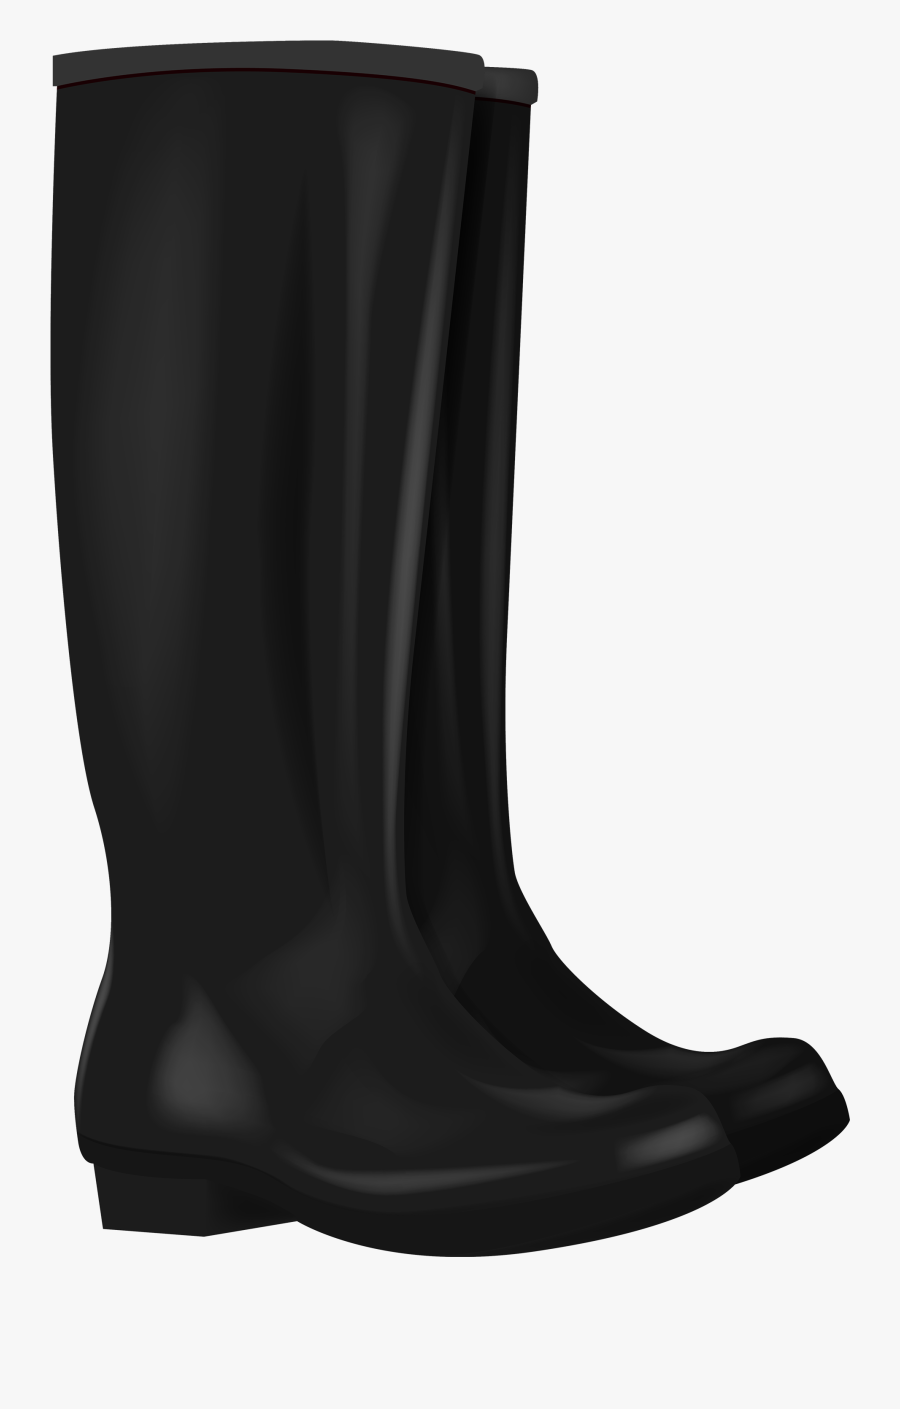 Black Rubber Boots Png Clipart - Rain Boot, Transparent Clipart